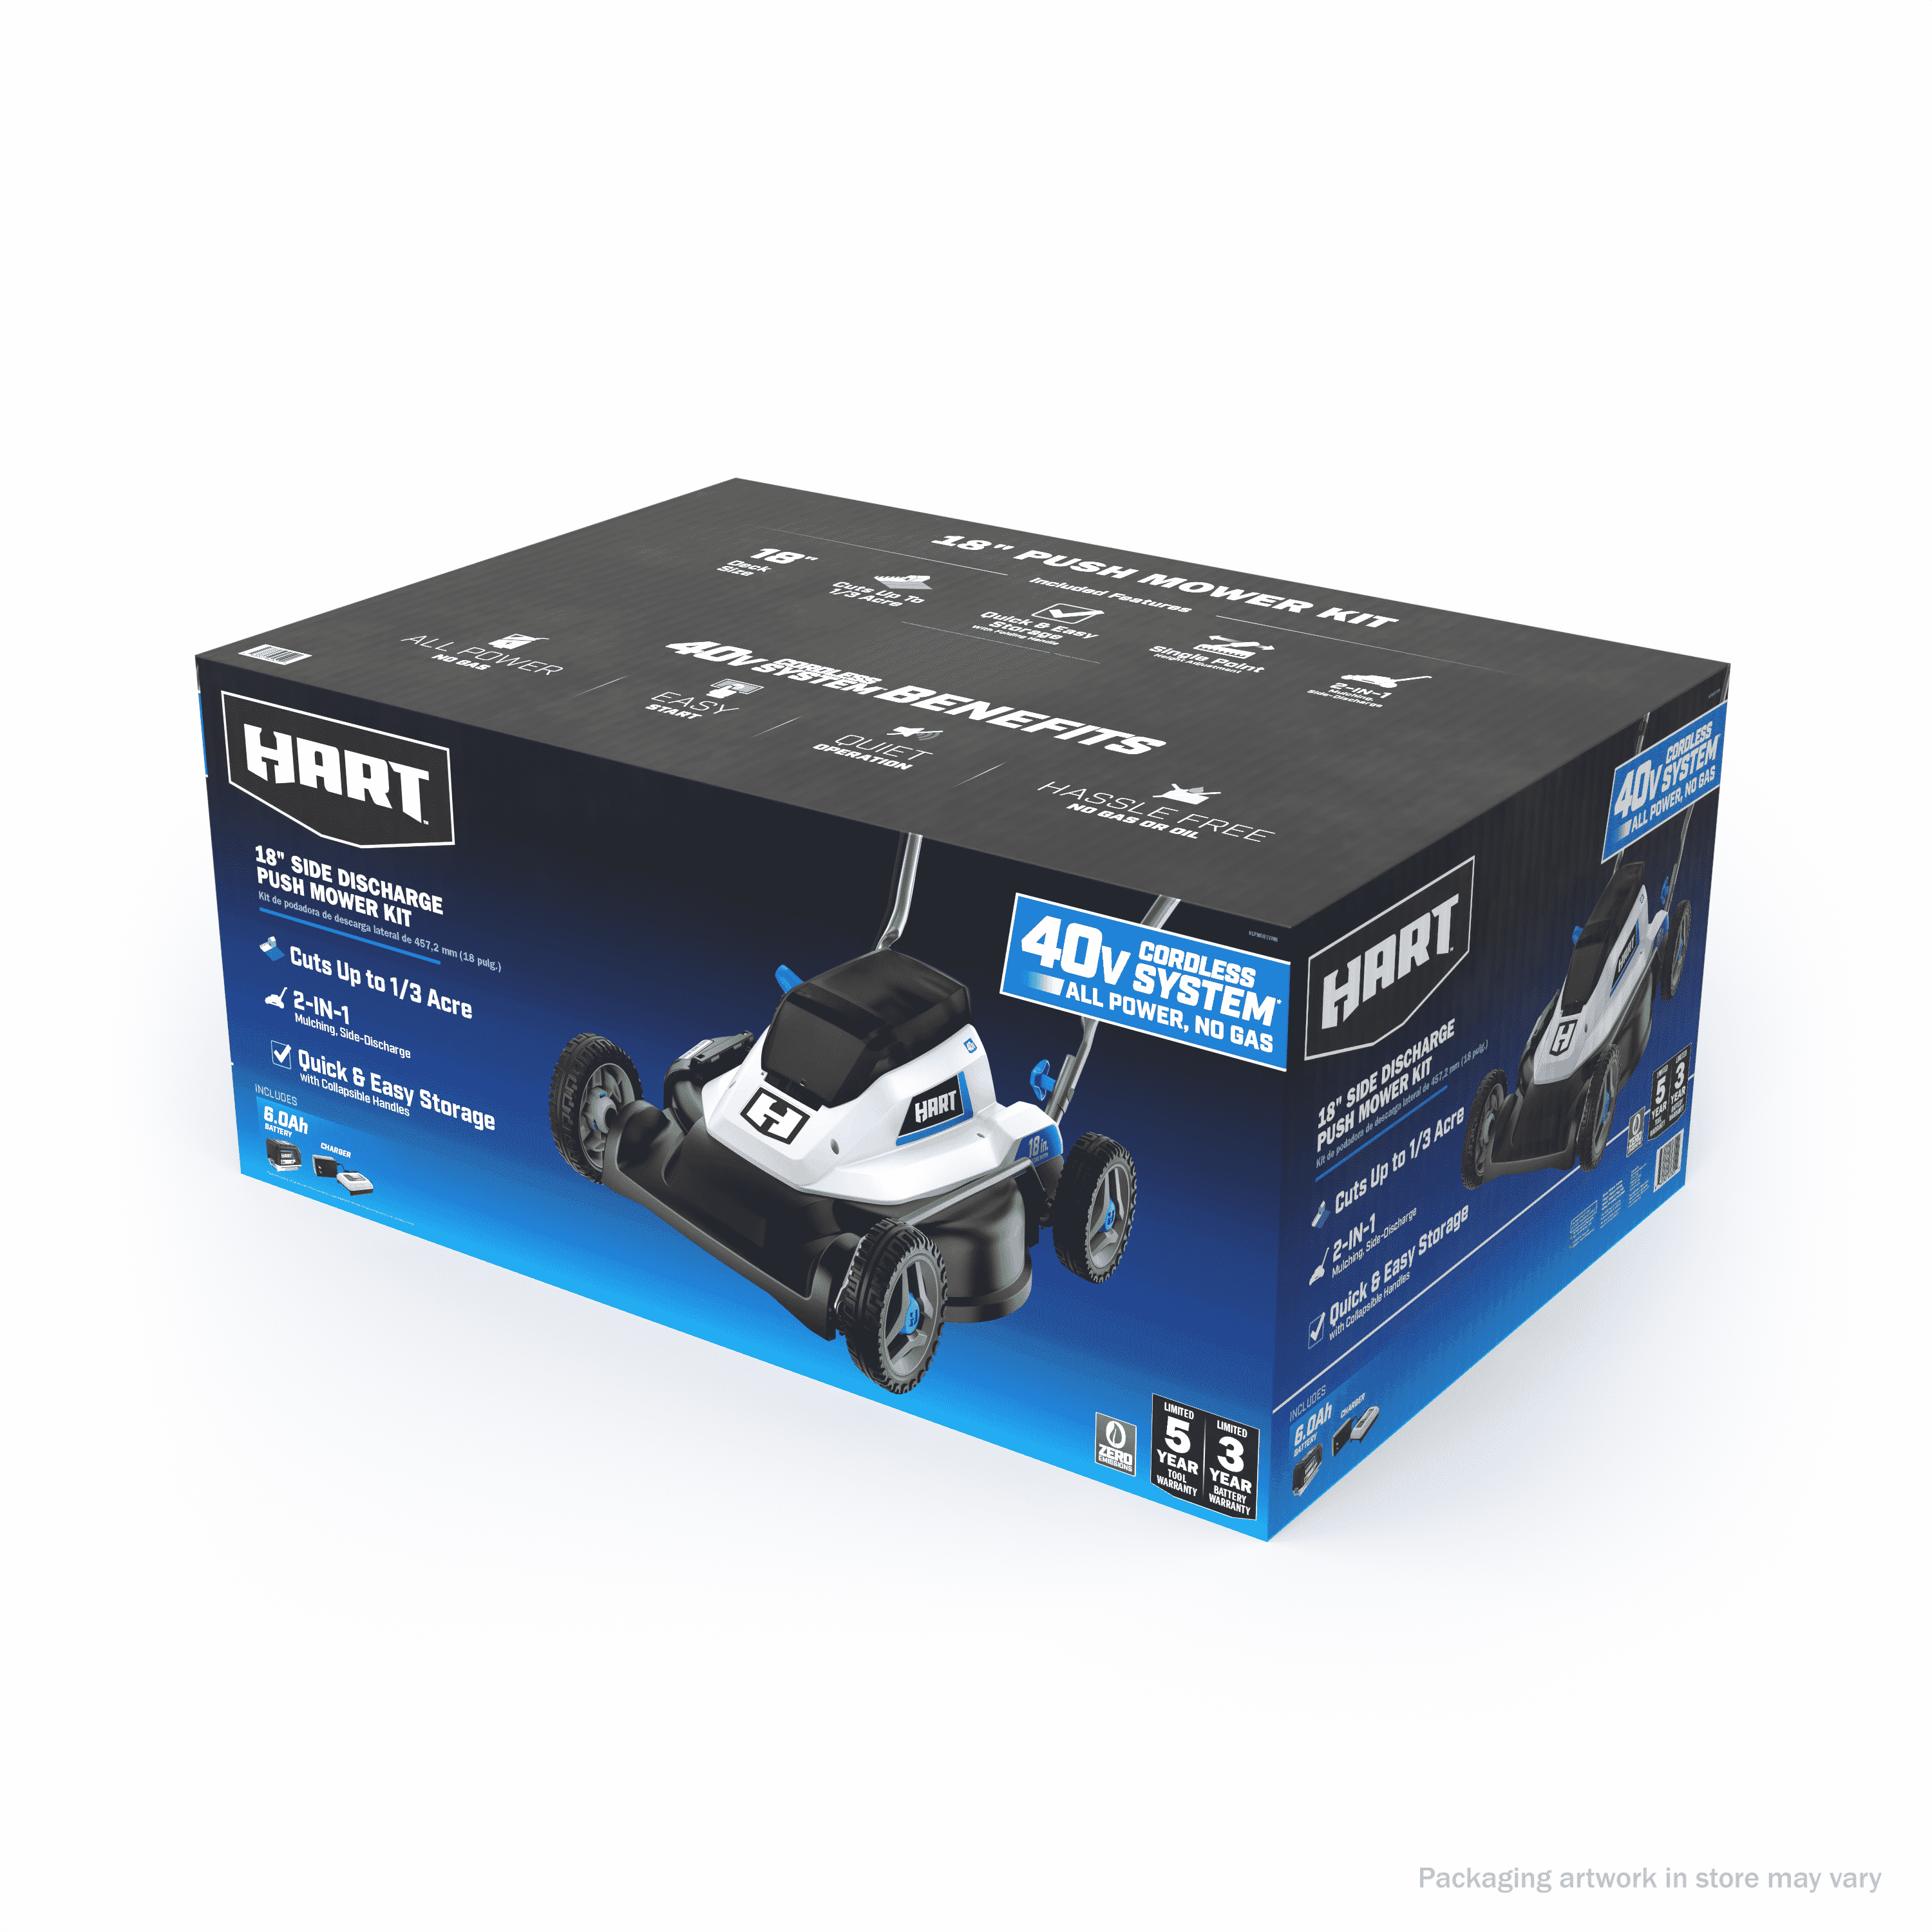 HART 40-Volt Cordless 18-inch Push Mower Kit, (1) 6.0Ah Lithium-Ion Battery  